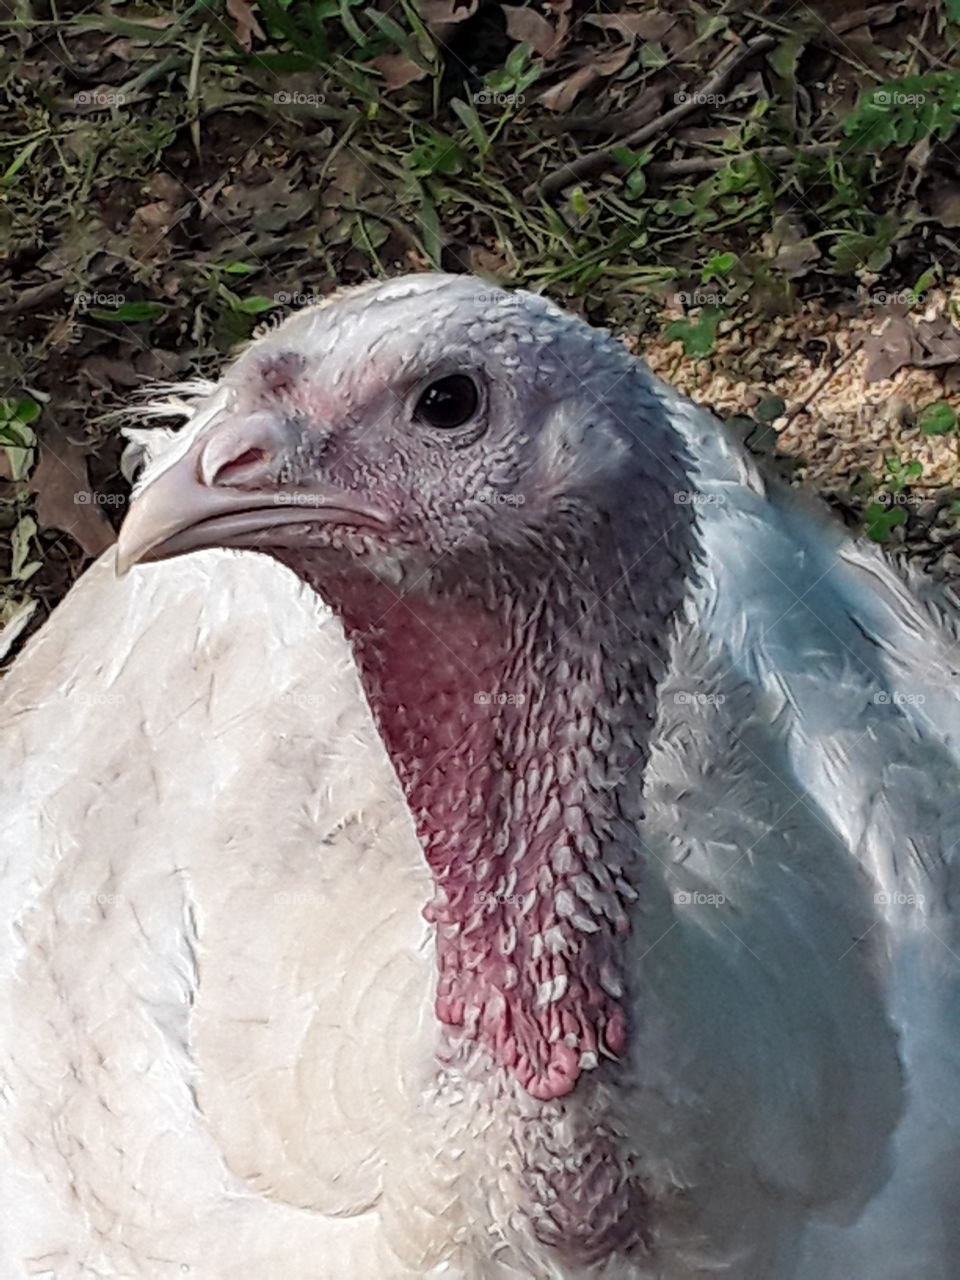 Femal Turkey